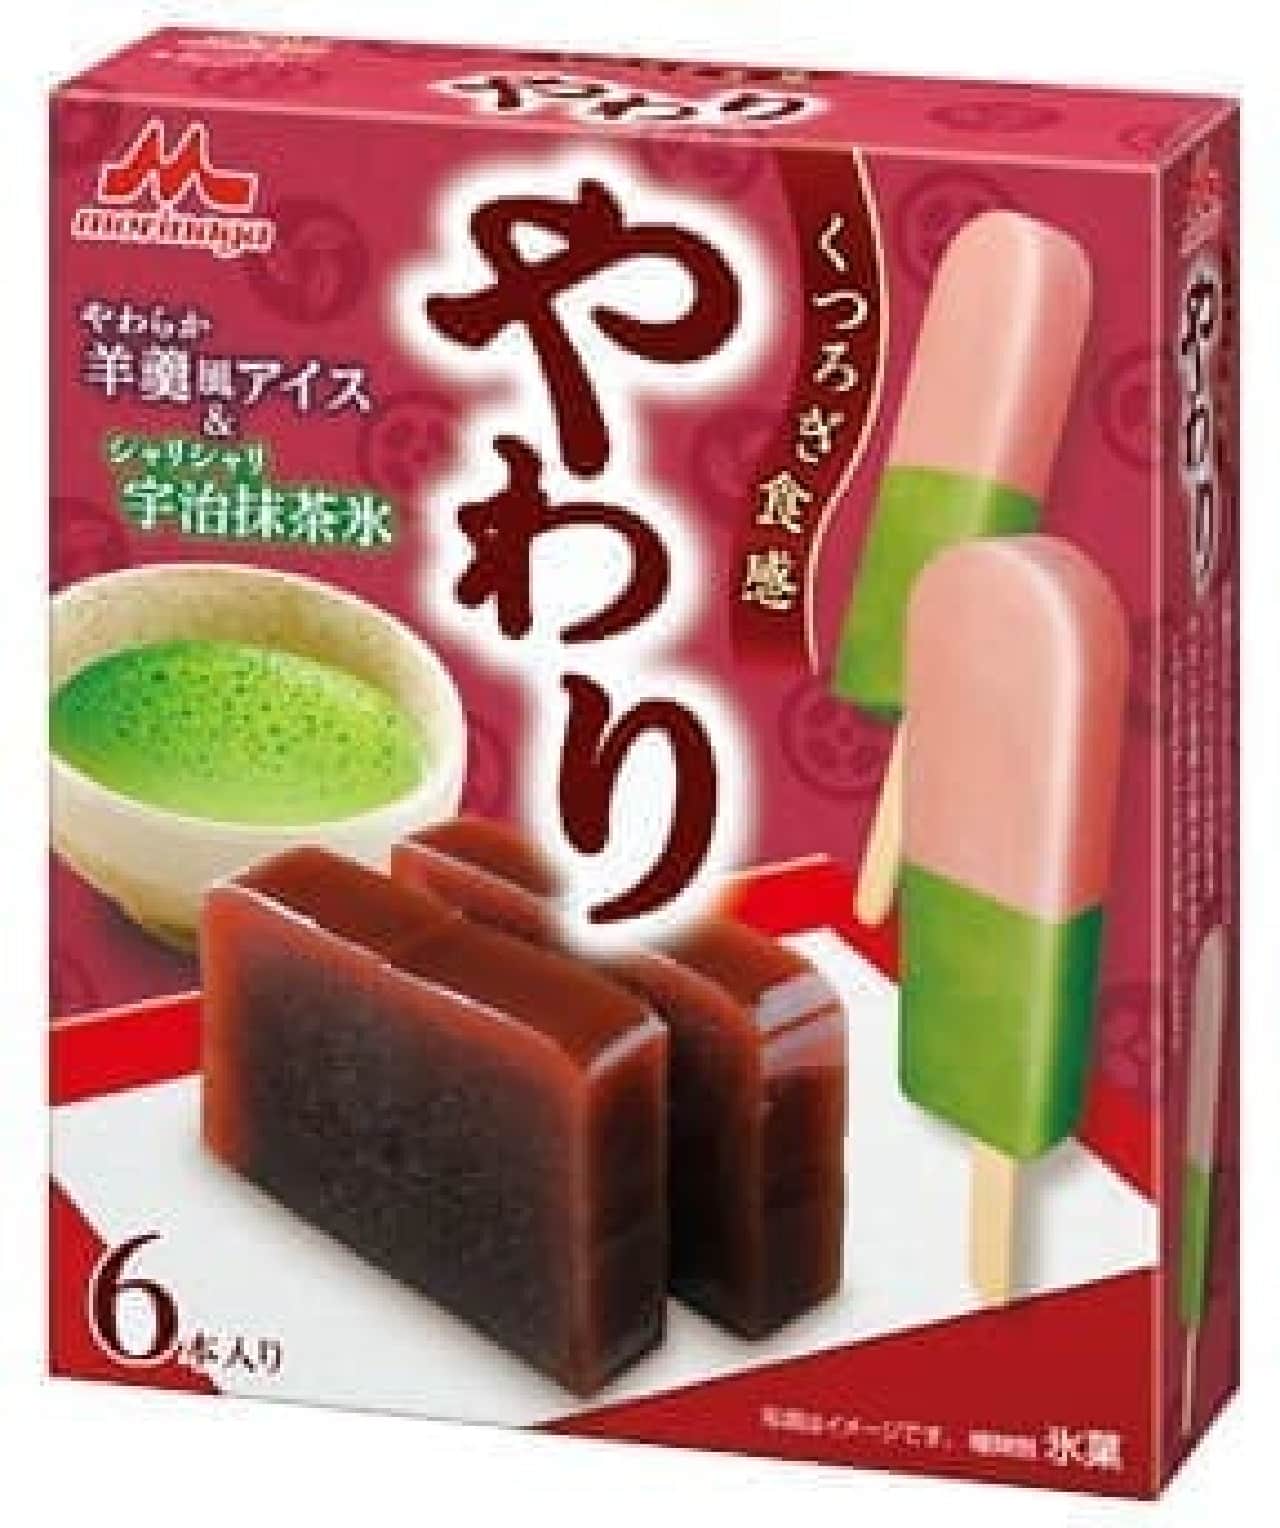 Soft yokan-style ice cream & Uji matcha ice cream